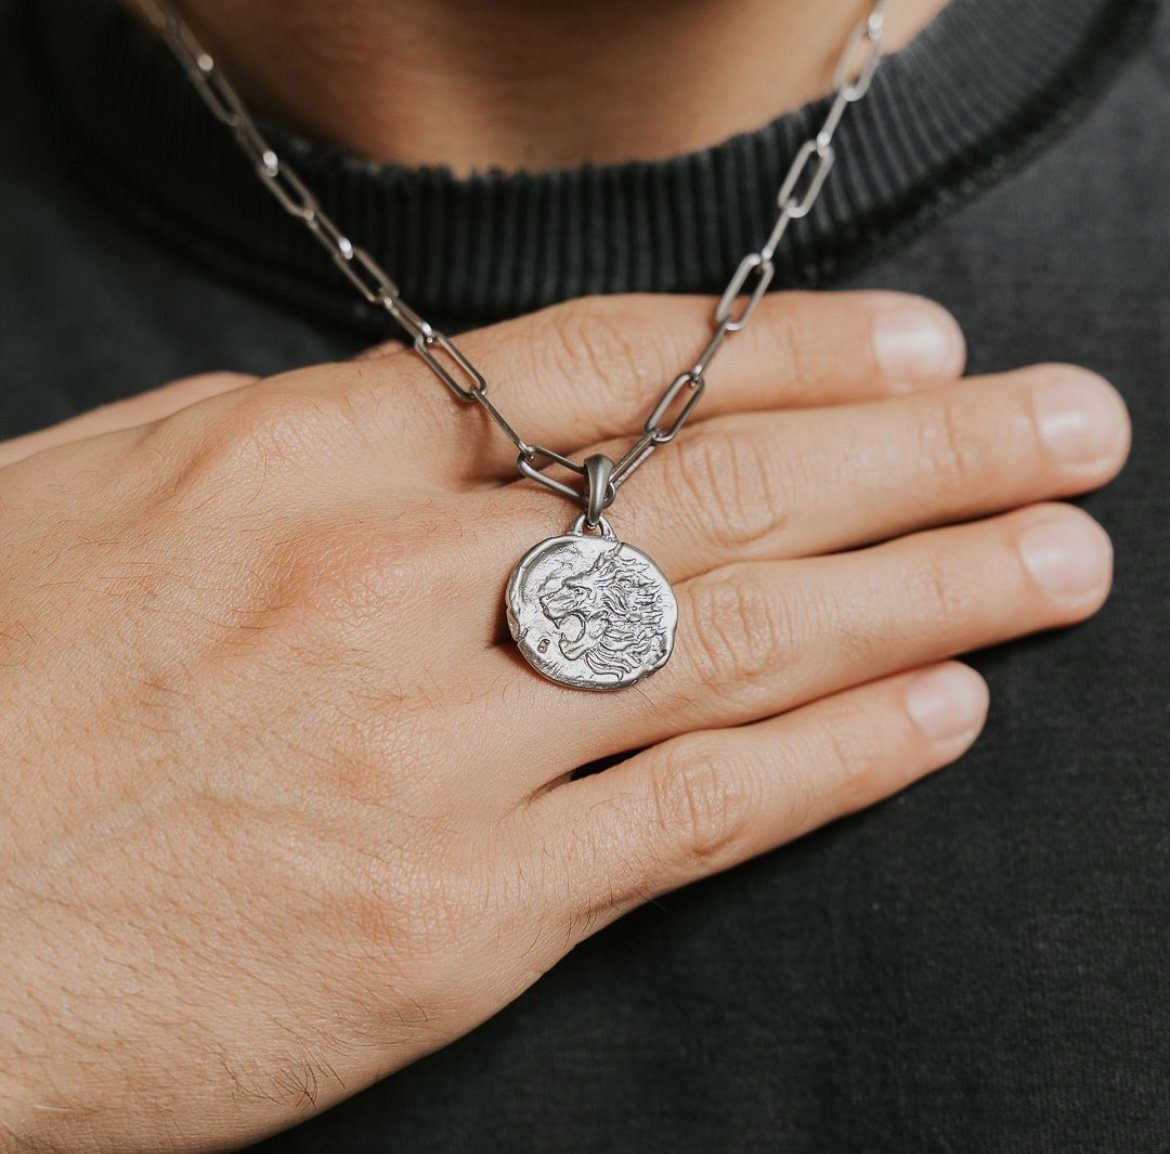 Leon necklace - silver